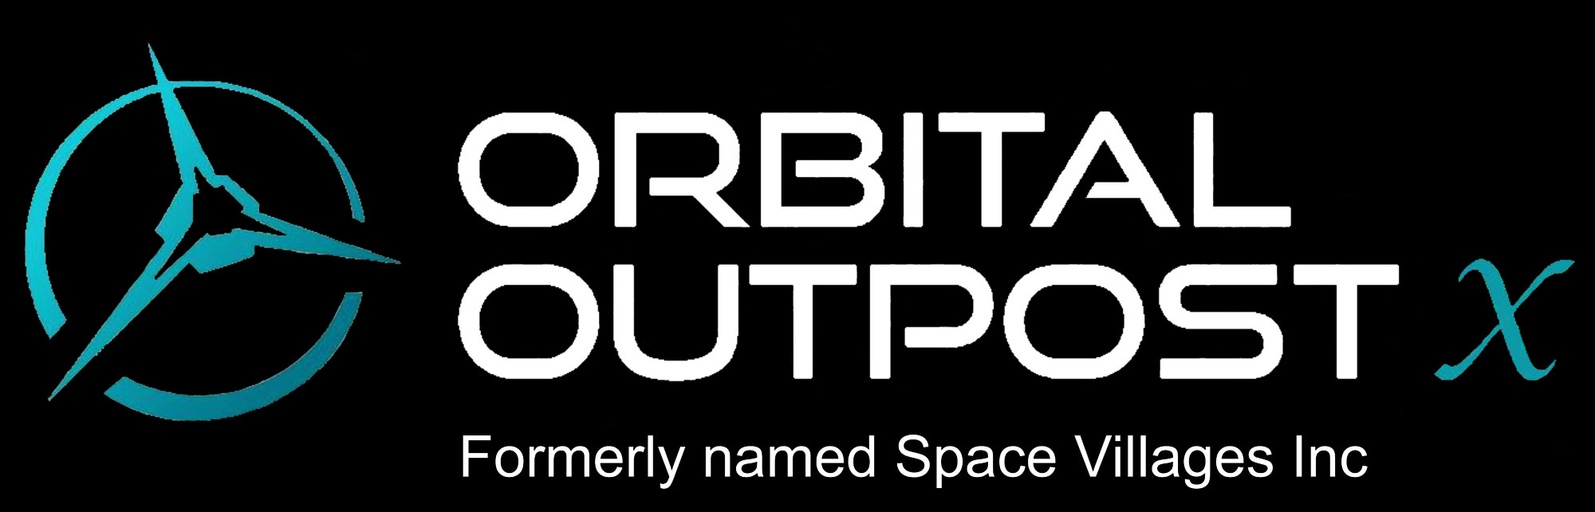 Orbital Outpost X (Space Villages)